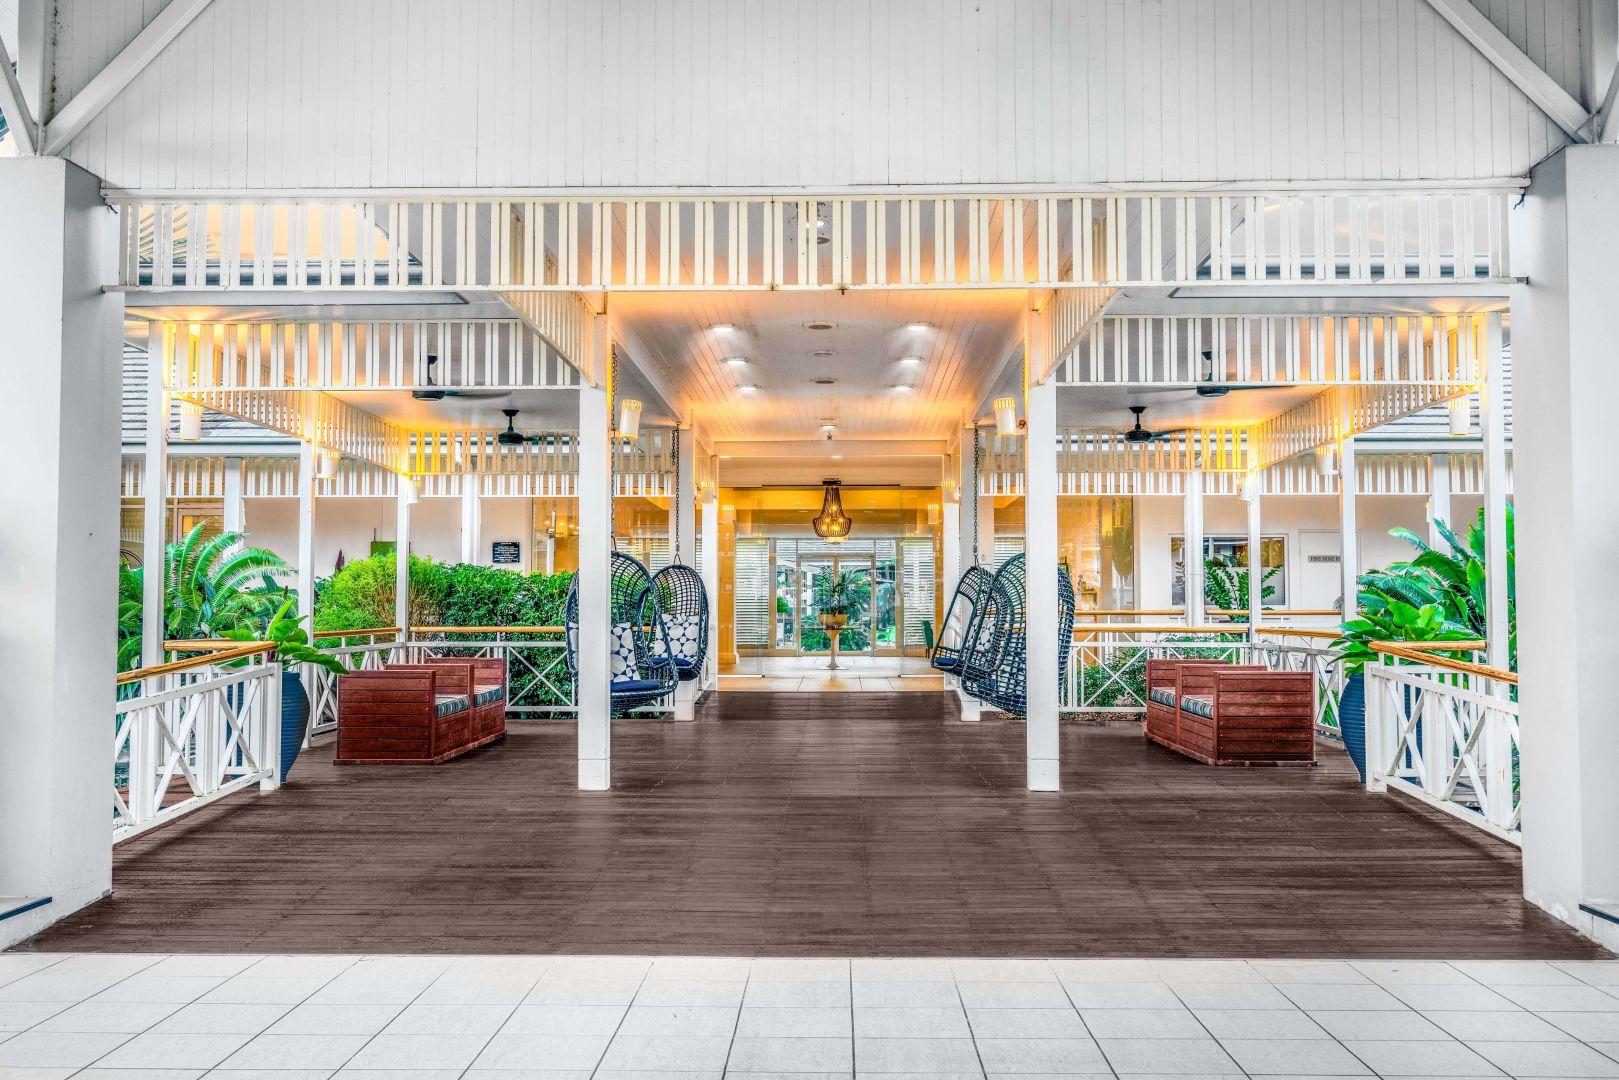 Hotel Grand Chancellor Palm Cove Exterior photo